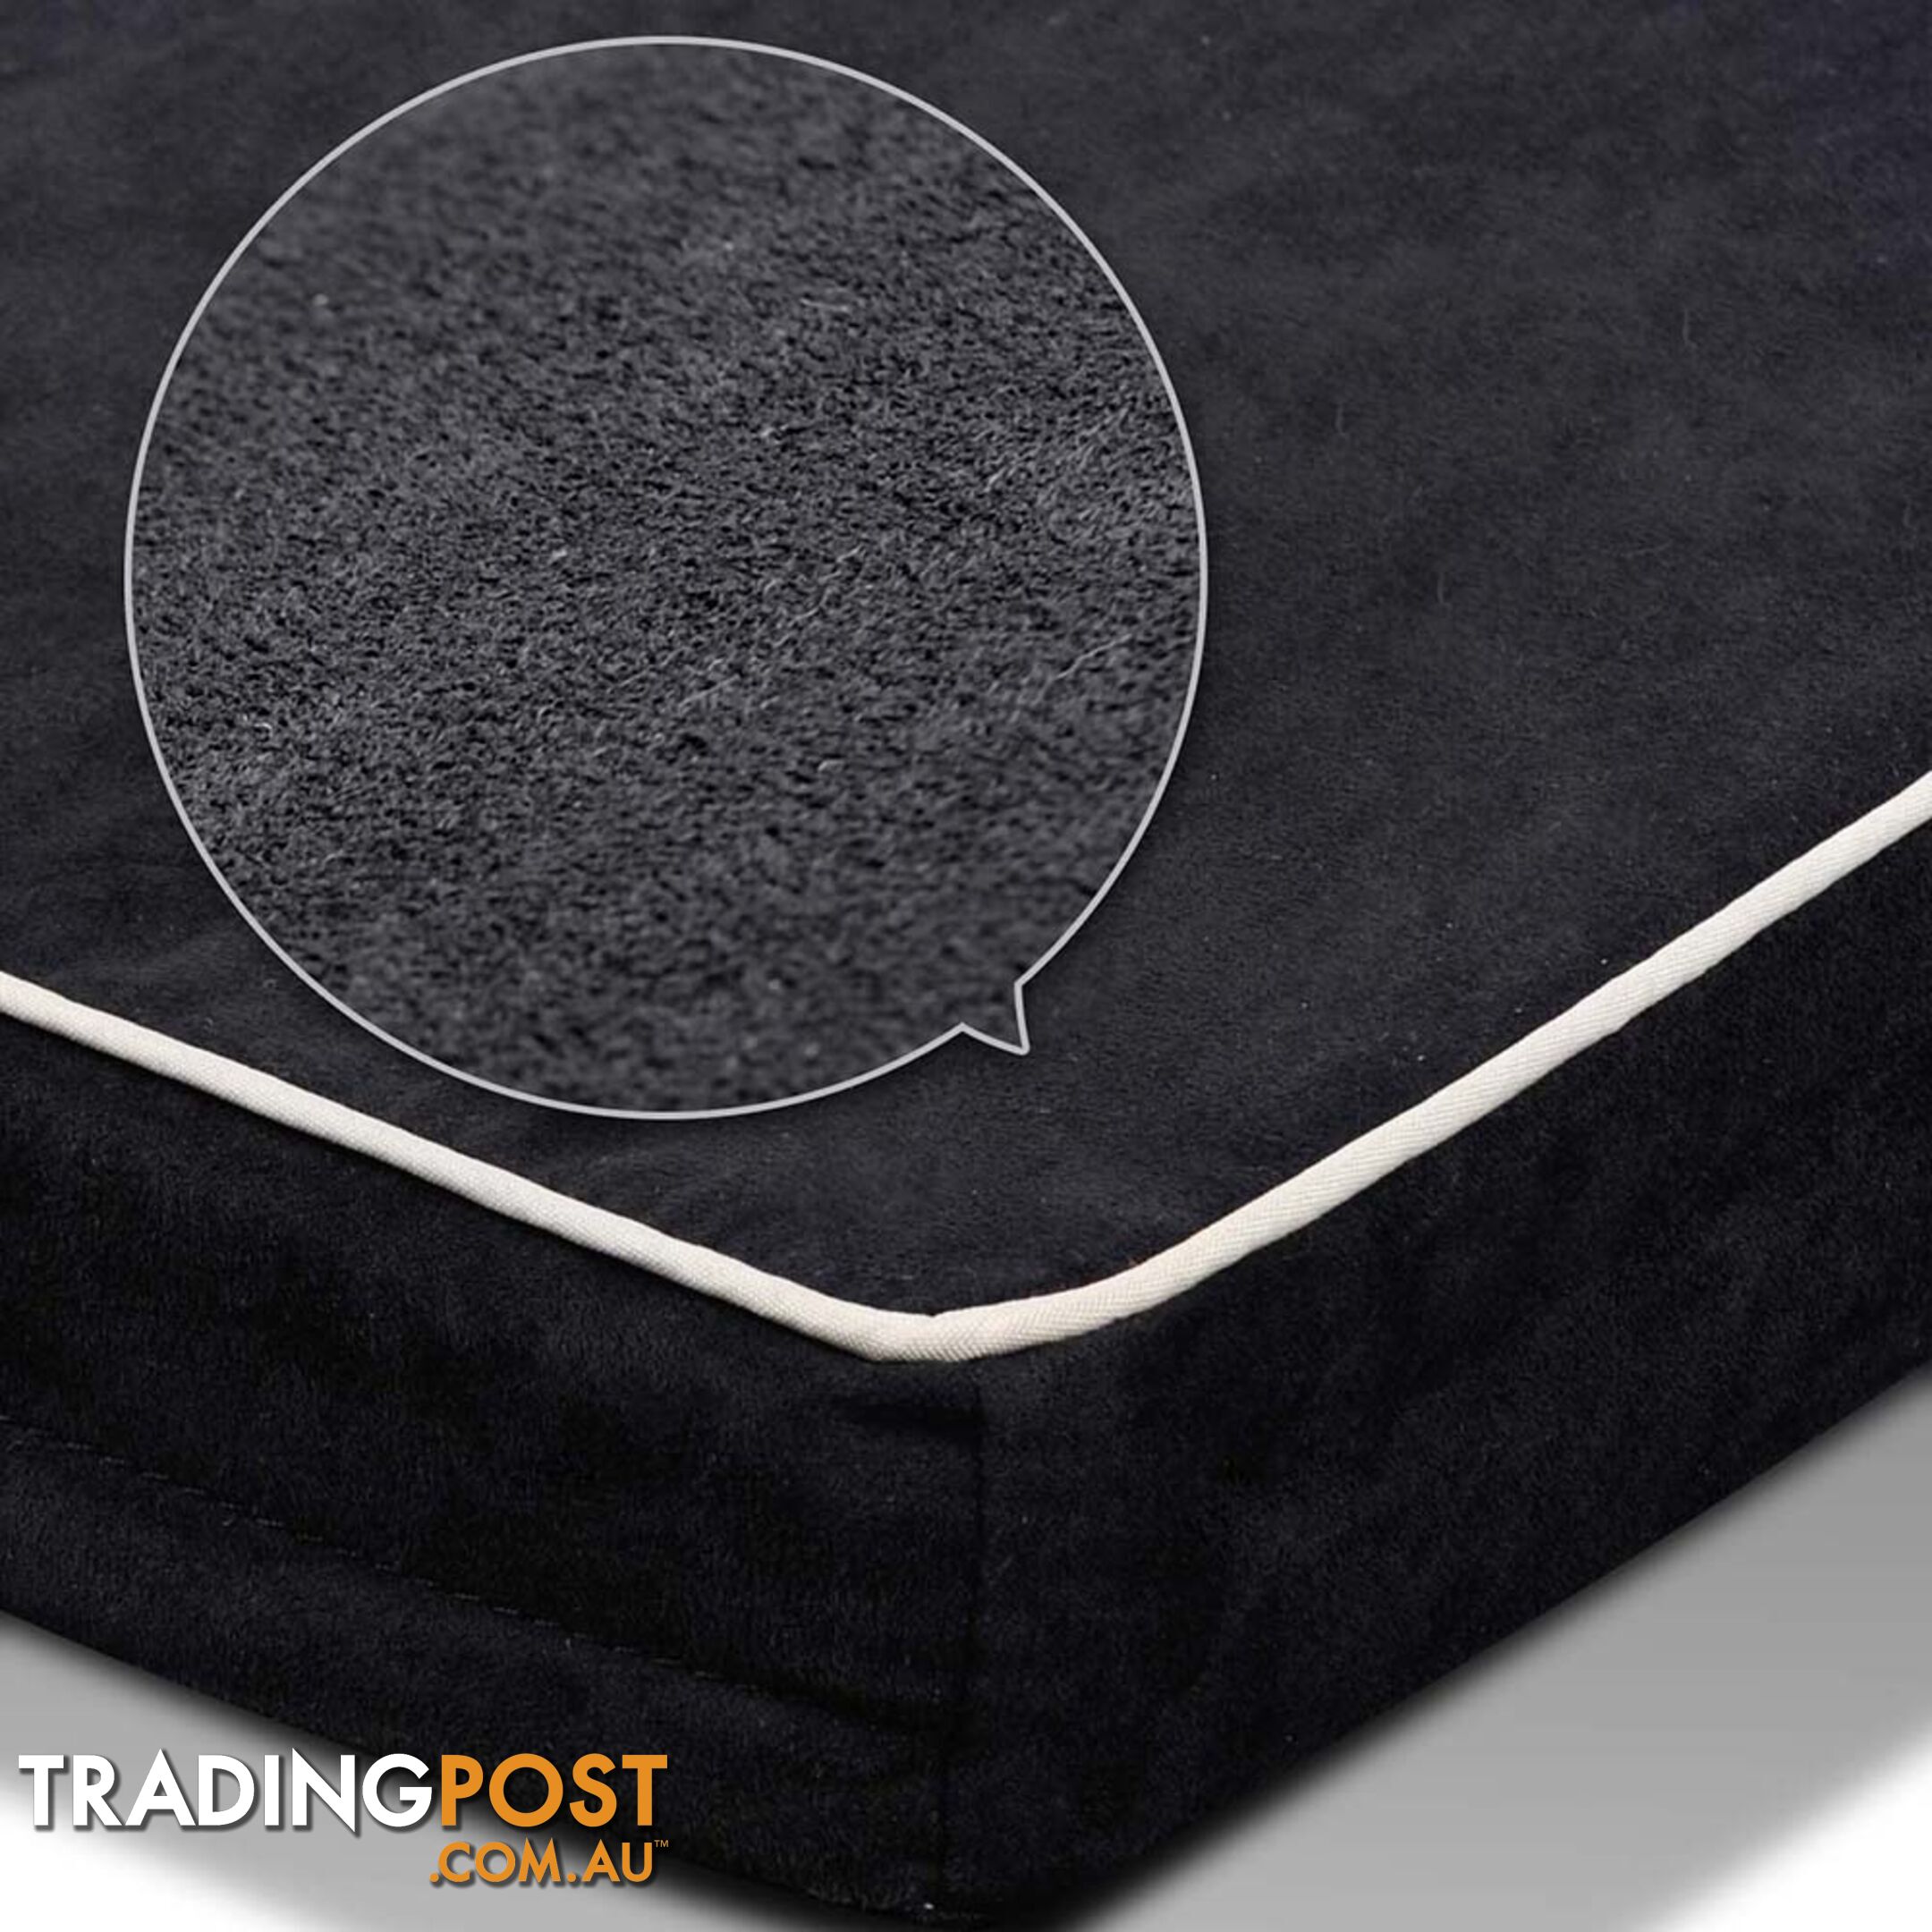 Pet Dog Anti Skid Sleep Memory Foam Mattress Bed Large Black